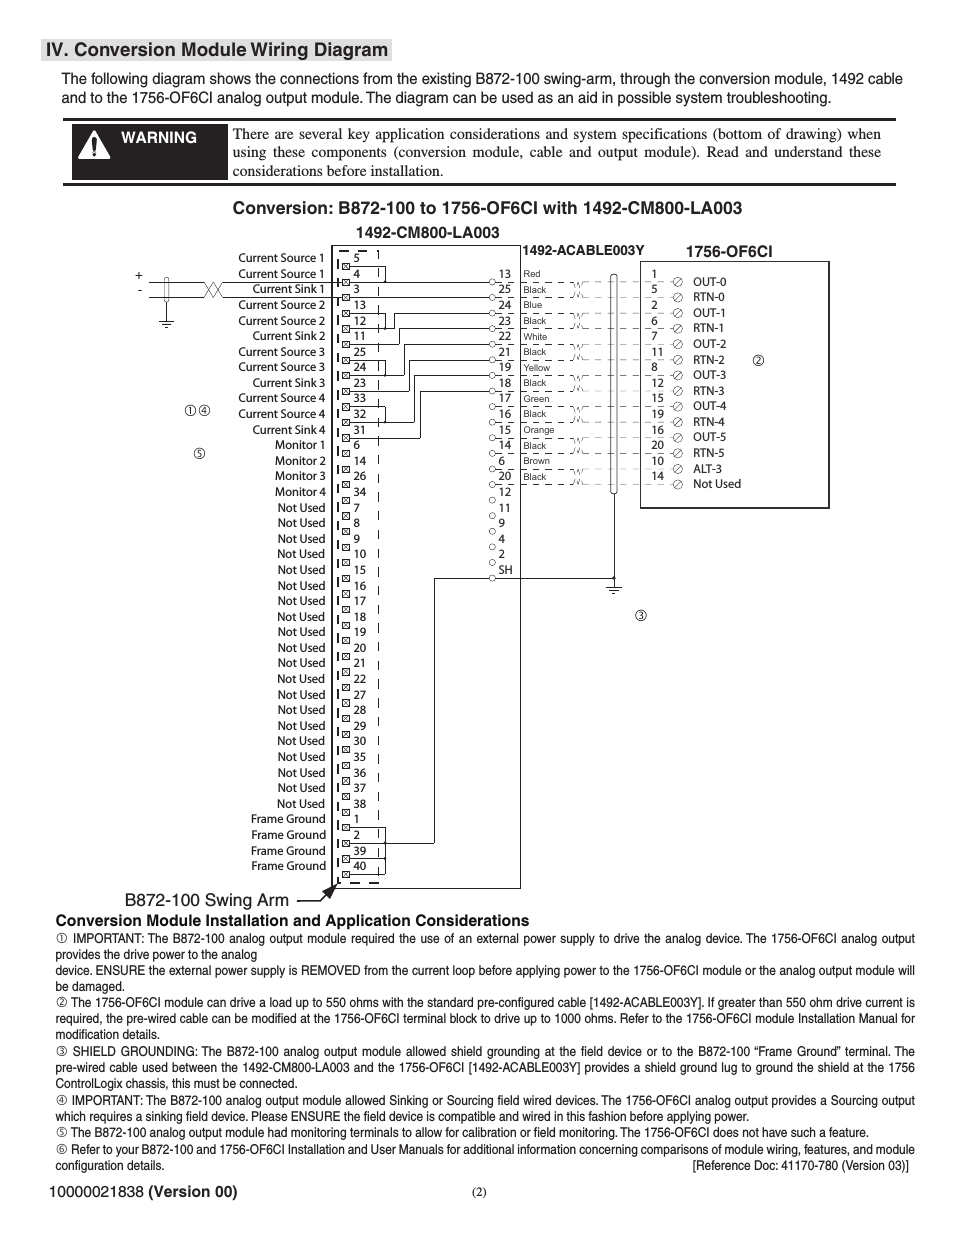 iv conversion module wiring diagram rockwell automation 1492 cm800 la003 field wire